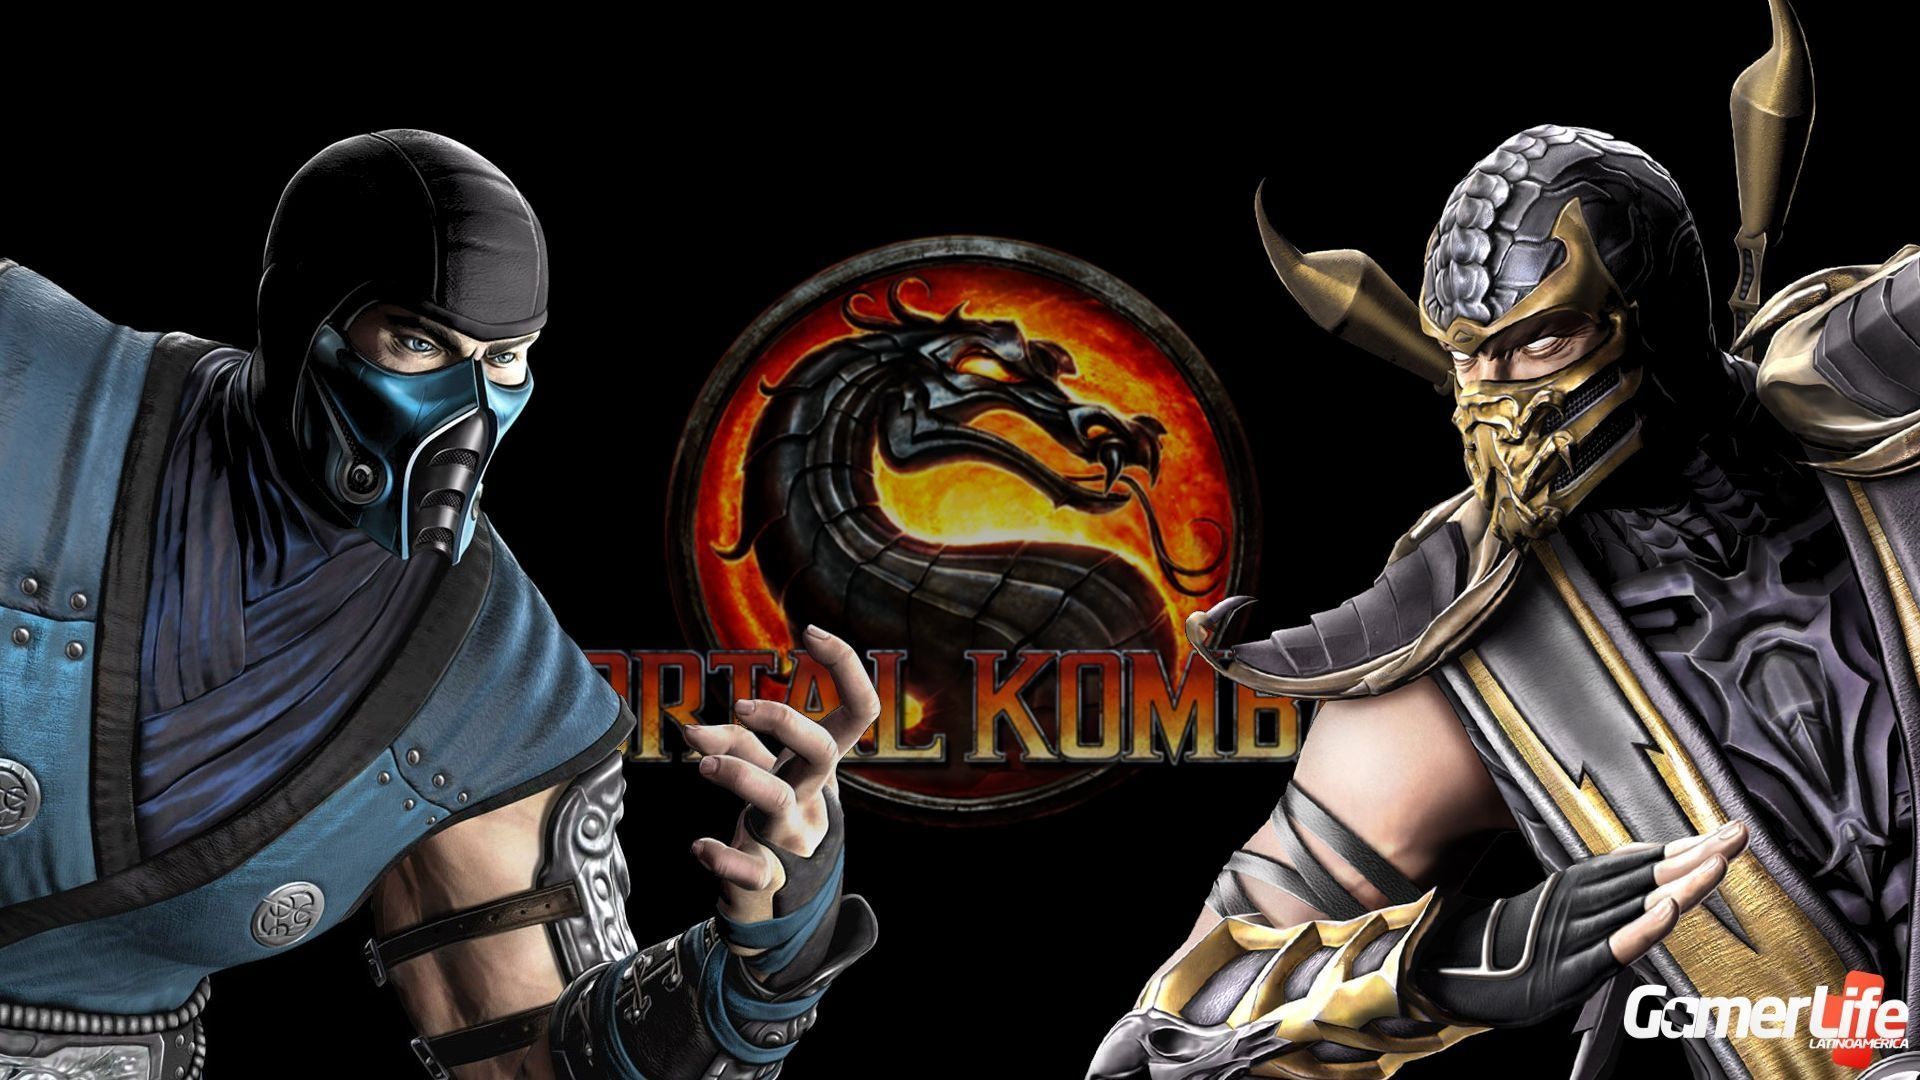 Mk9 wallpaper - Mortal Kombat 9 komplete Edition Wallpaper ...